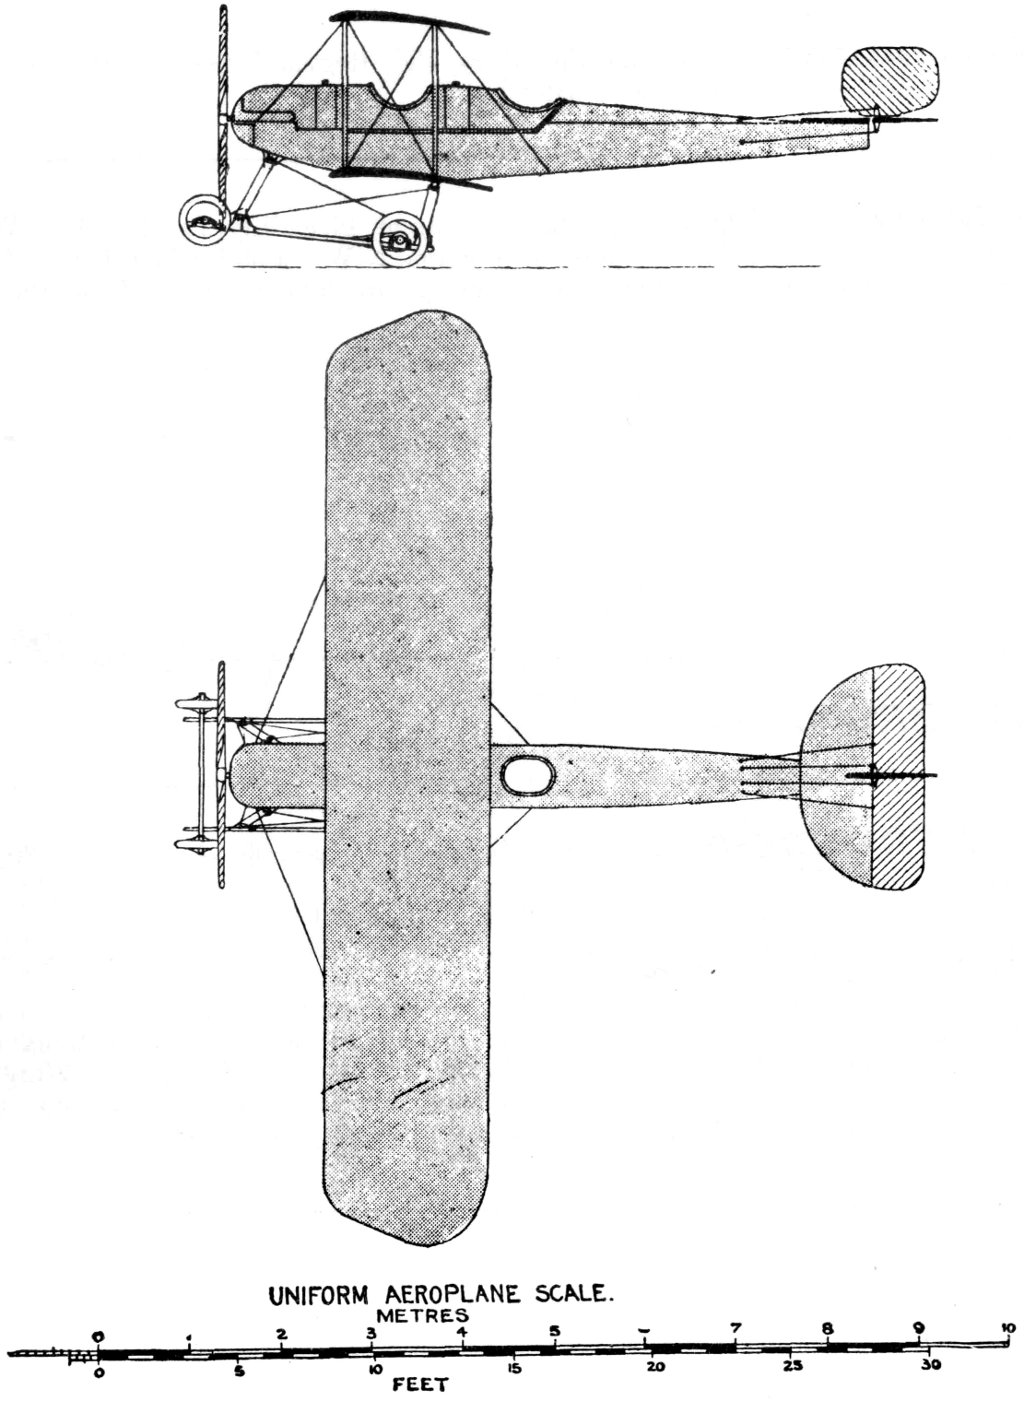 70 h.p. biplane. Uniform Aeroplane Scale